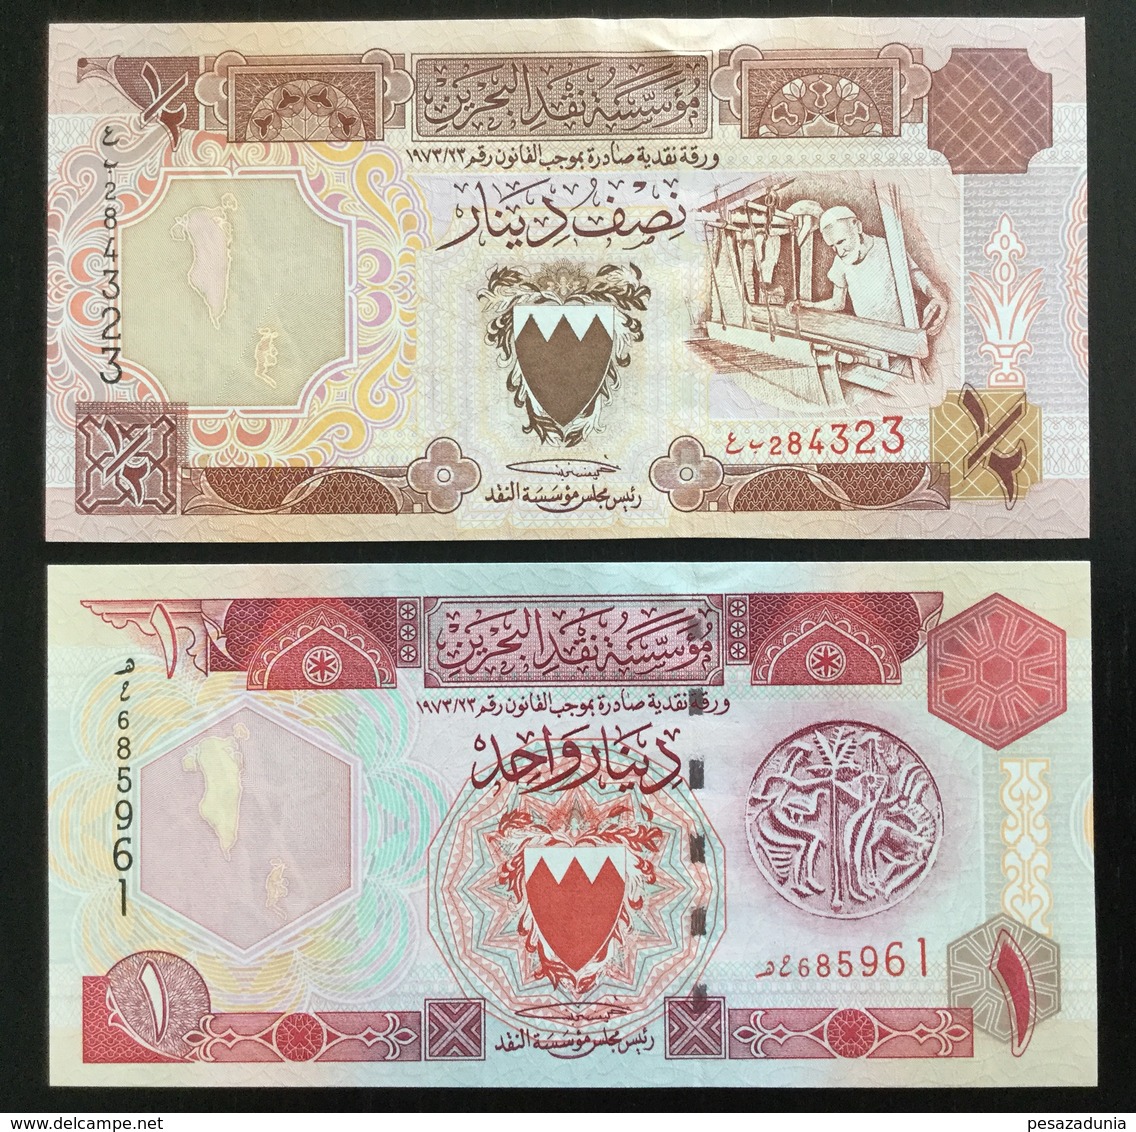 BAHRAIN SET 1/2, 1 DINAR BANKNOTES (1998) UNC - Bahrein